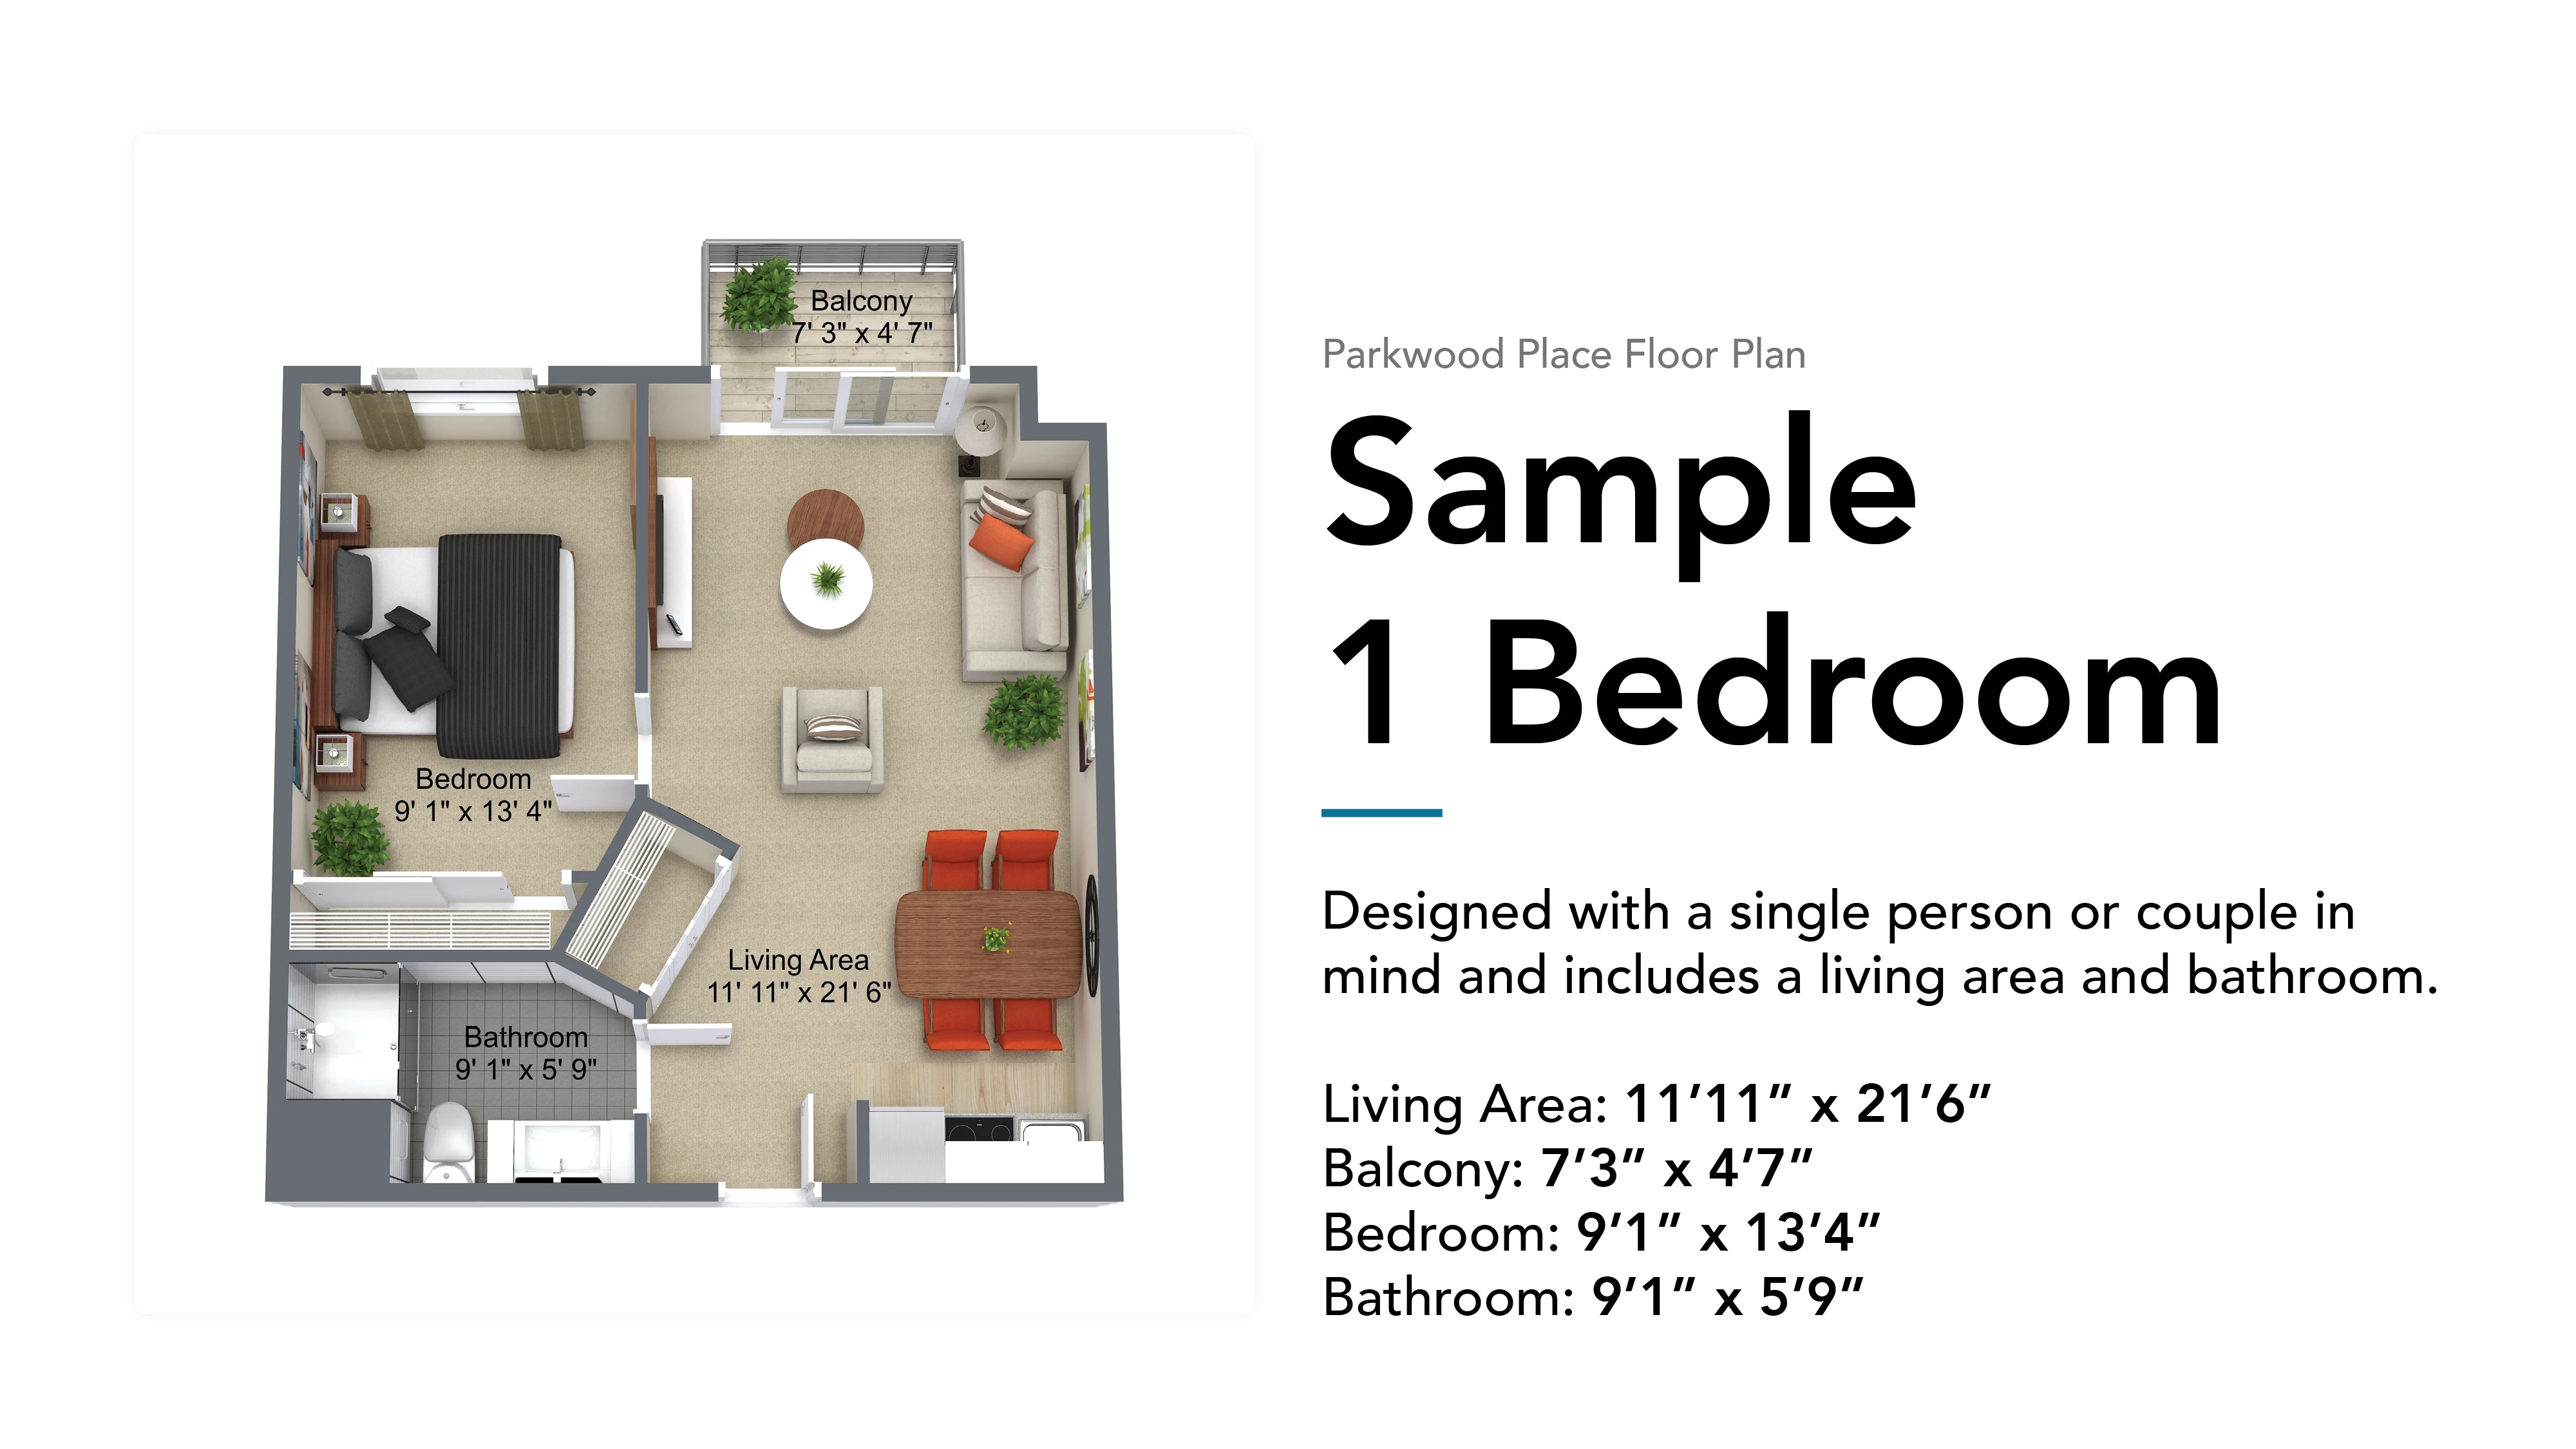 parkwood place sample 1 bedroom floor plan